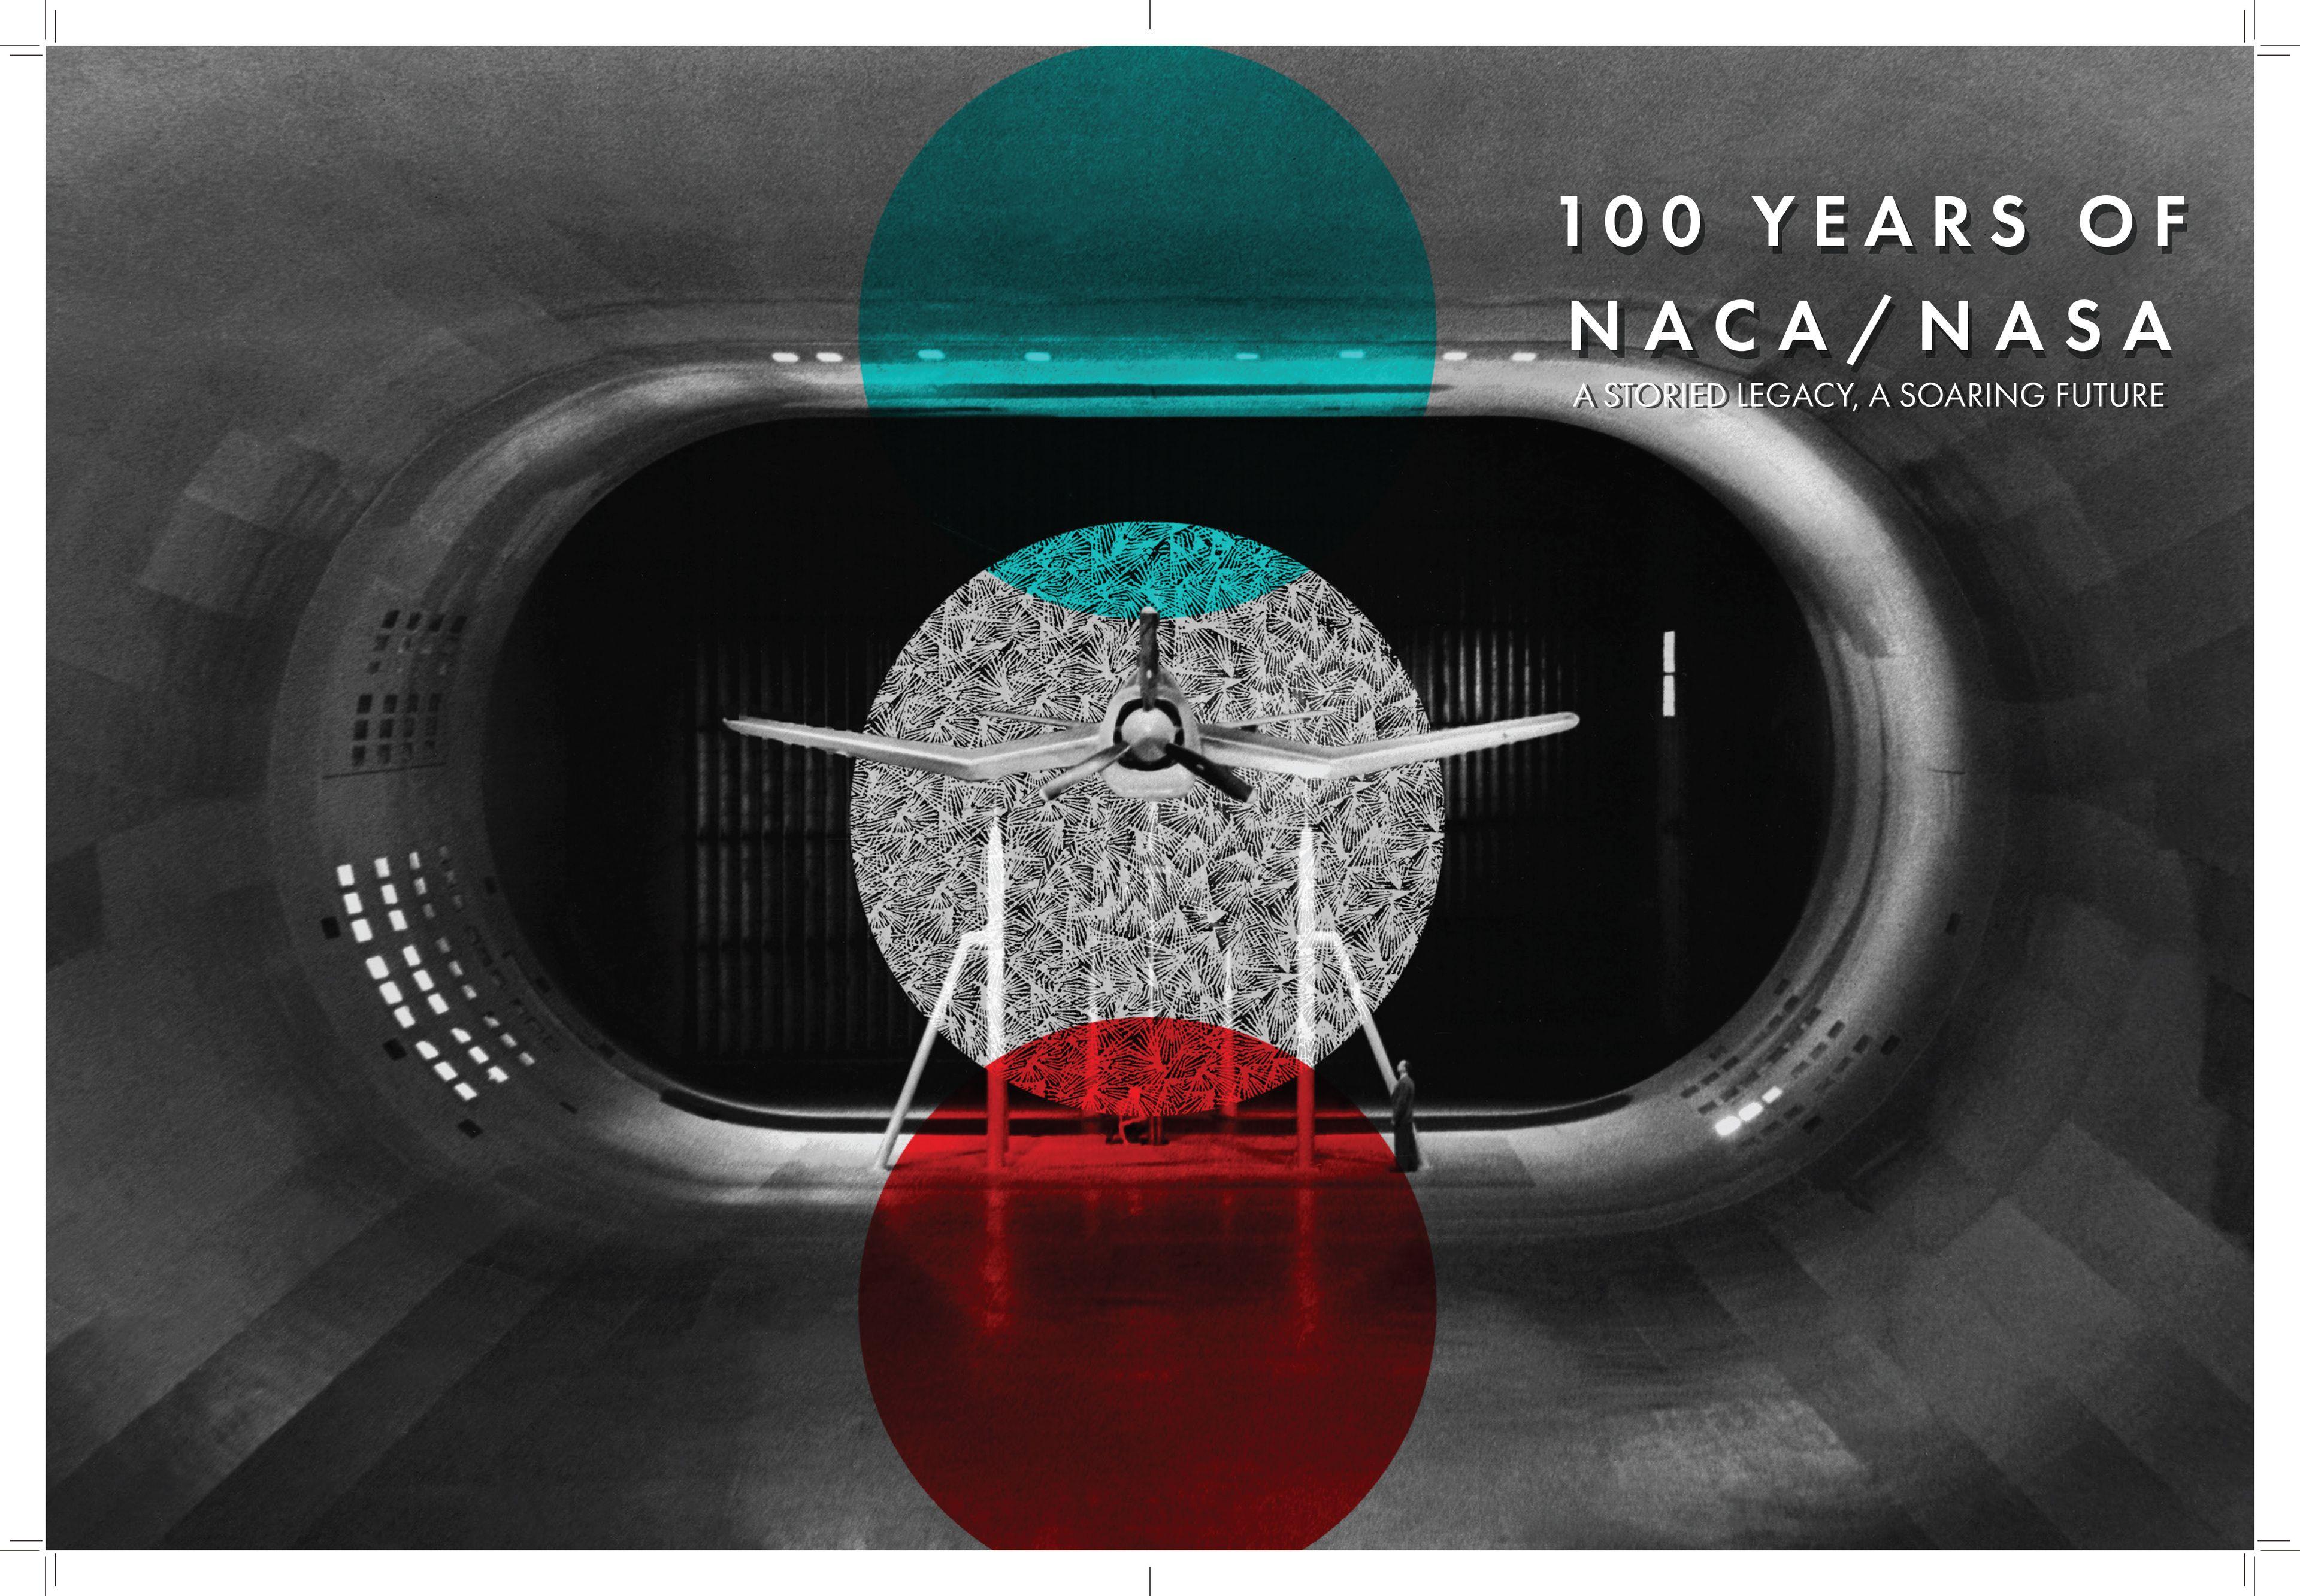 NACA NASA's Old Logo - Kayla Degenshein - NACA/NASA Centennial